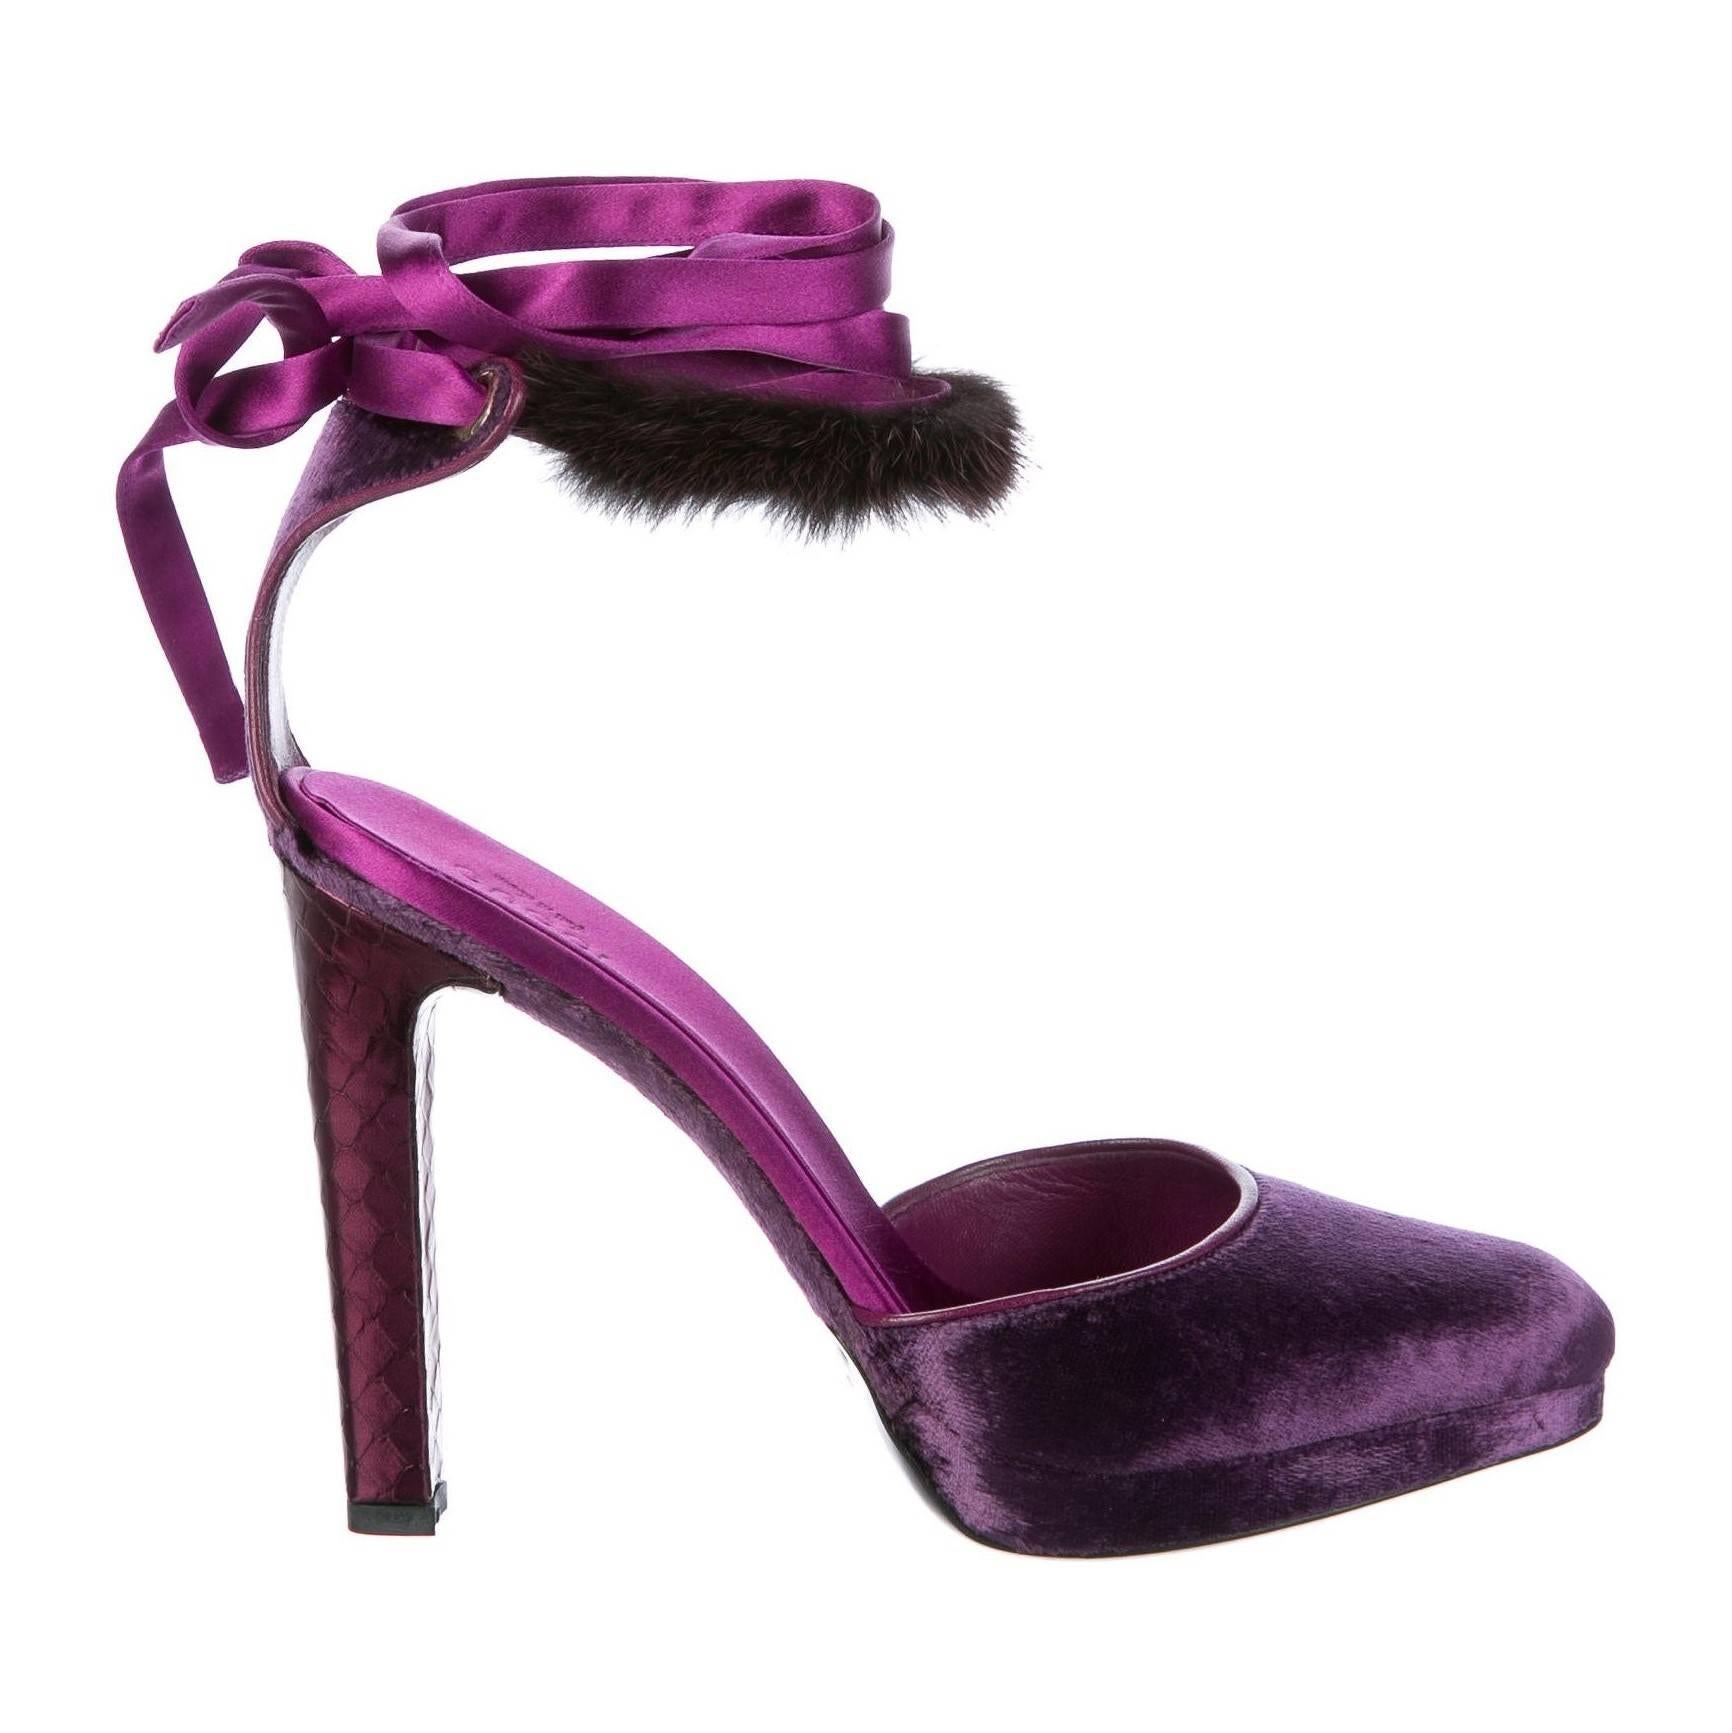 Tom Ford for Gucci Mink Python Heels
Brand New
U.S. Size: 7.5
* Mink, Satin, Python and Velvet heels
* Tom Ford's 